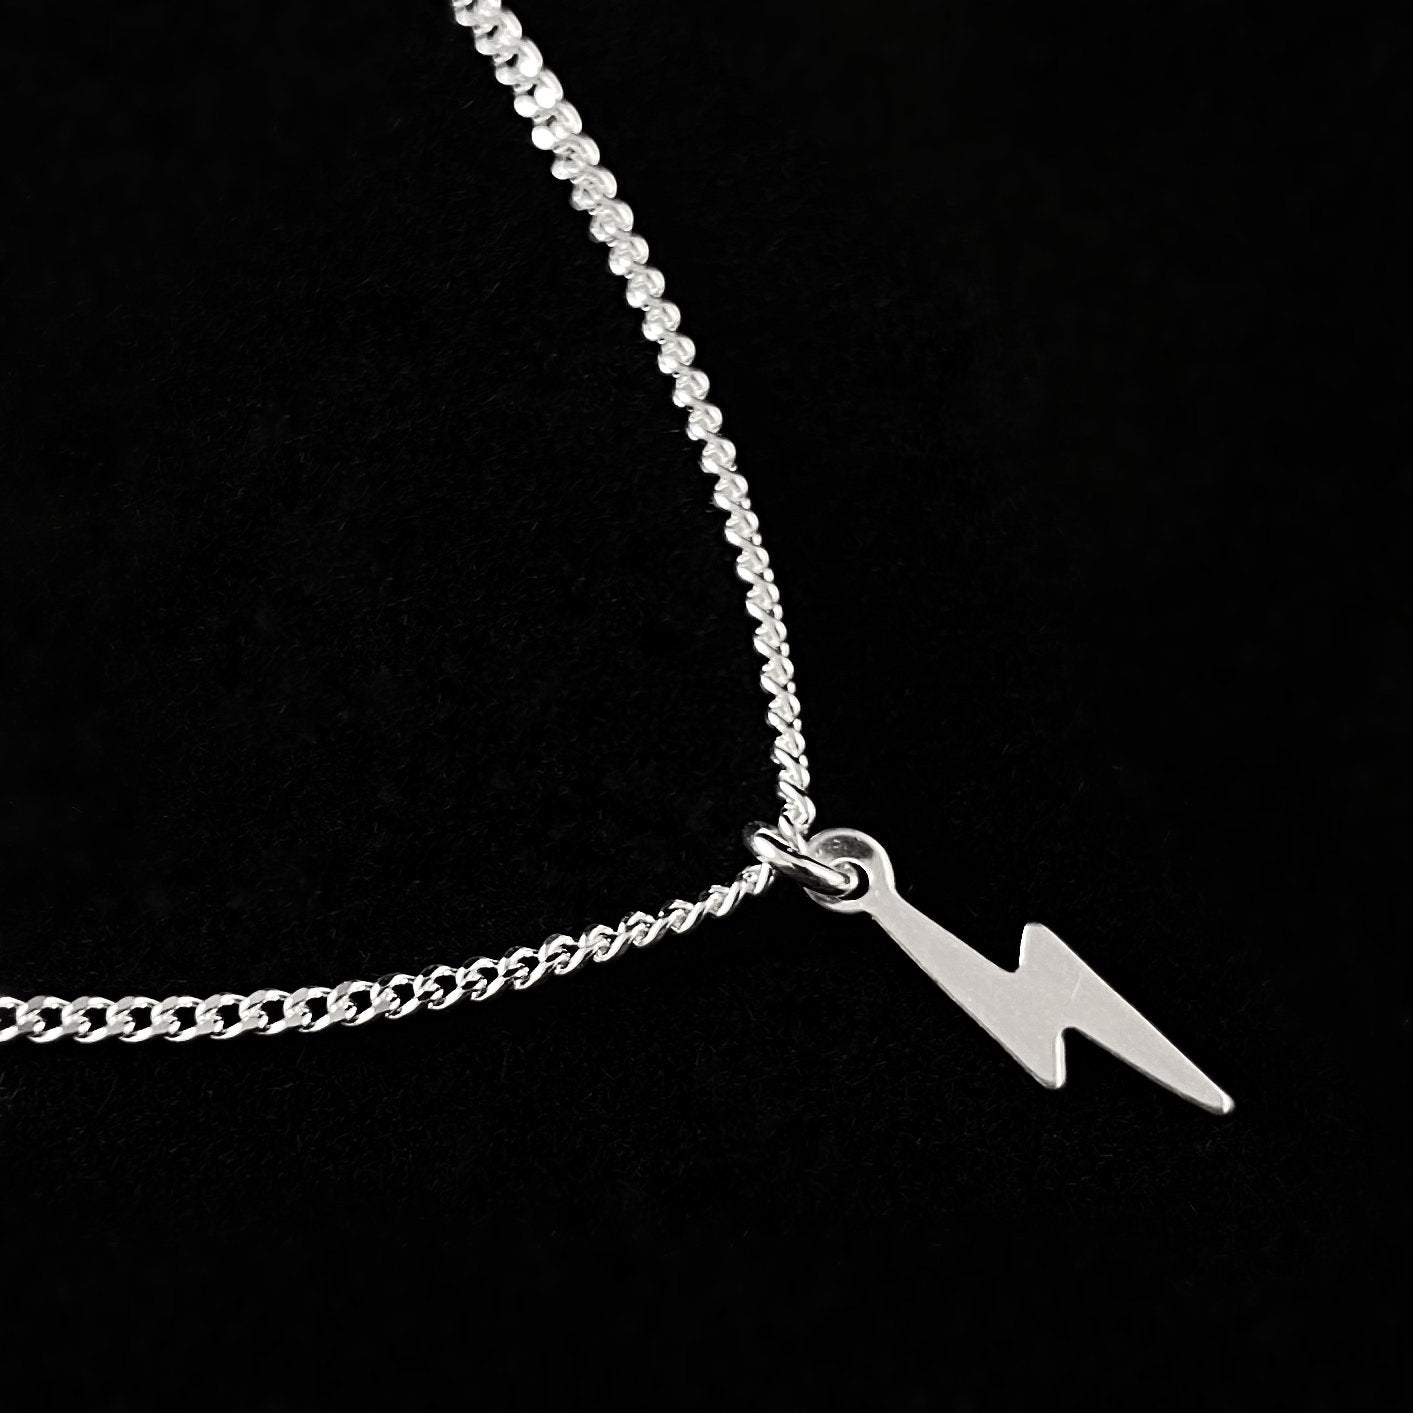 Delicate Silver Lightning Bolt Necklace - 1920s, Minimal